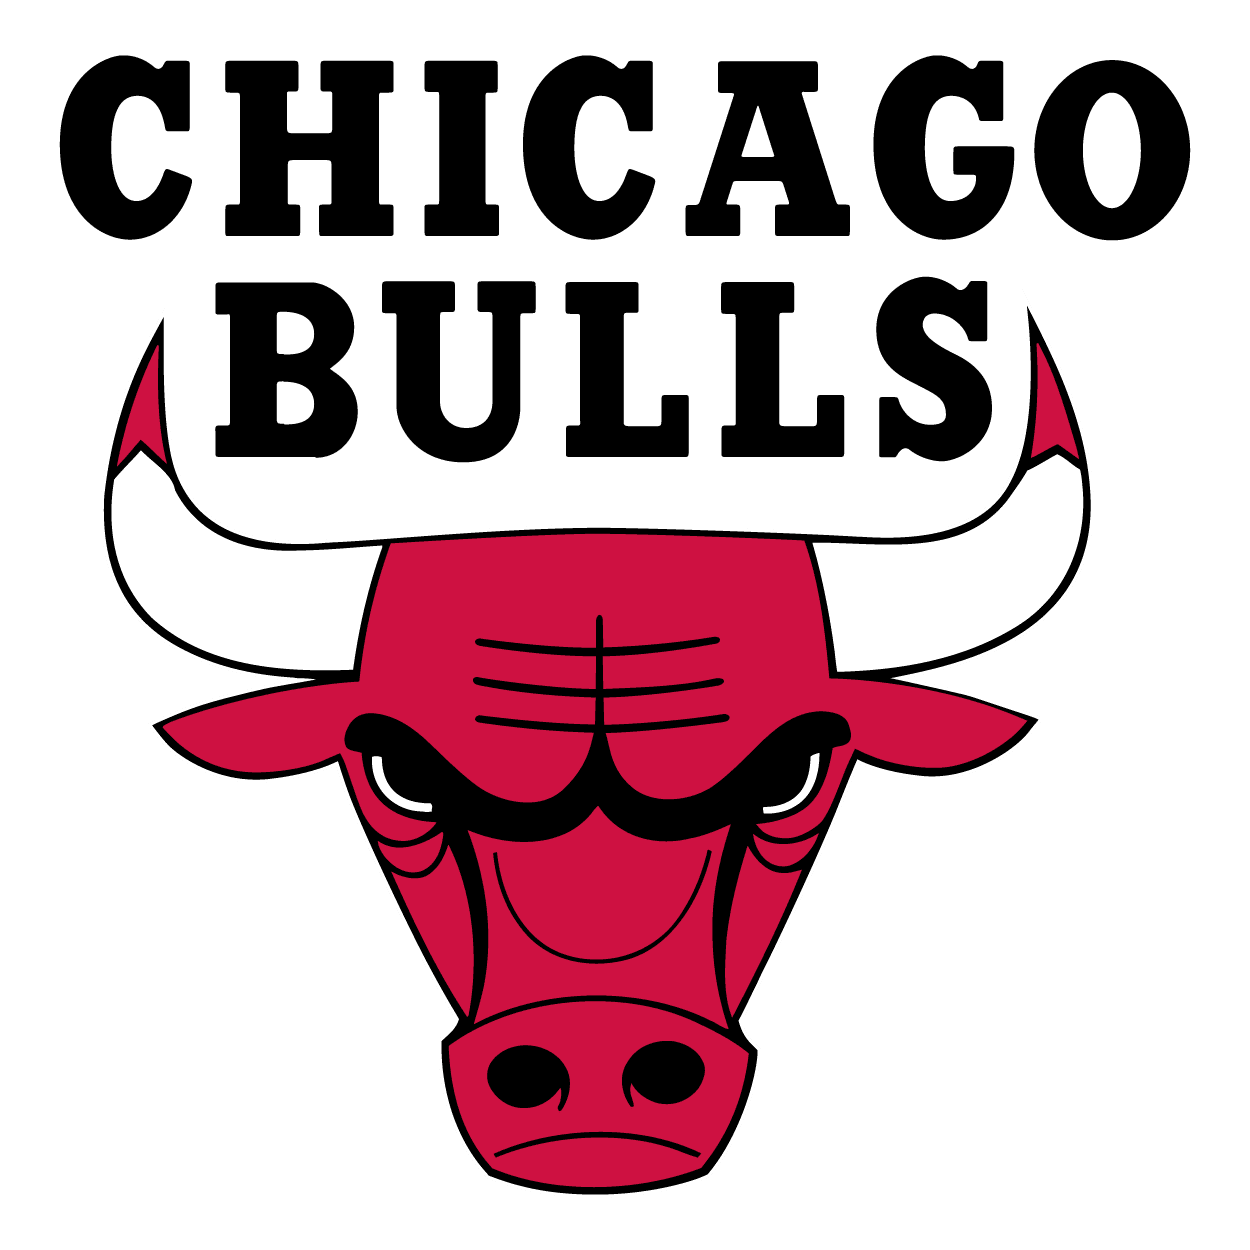 Chicago Bulls - Chicago Bulls Tickets | 2021 NBA Tickets & Schedule ...